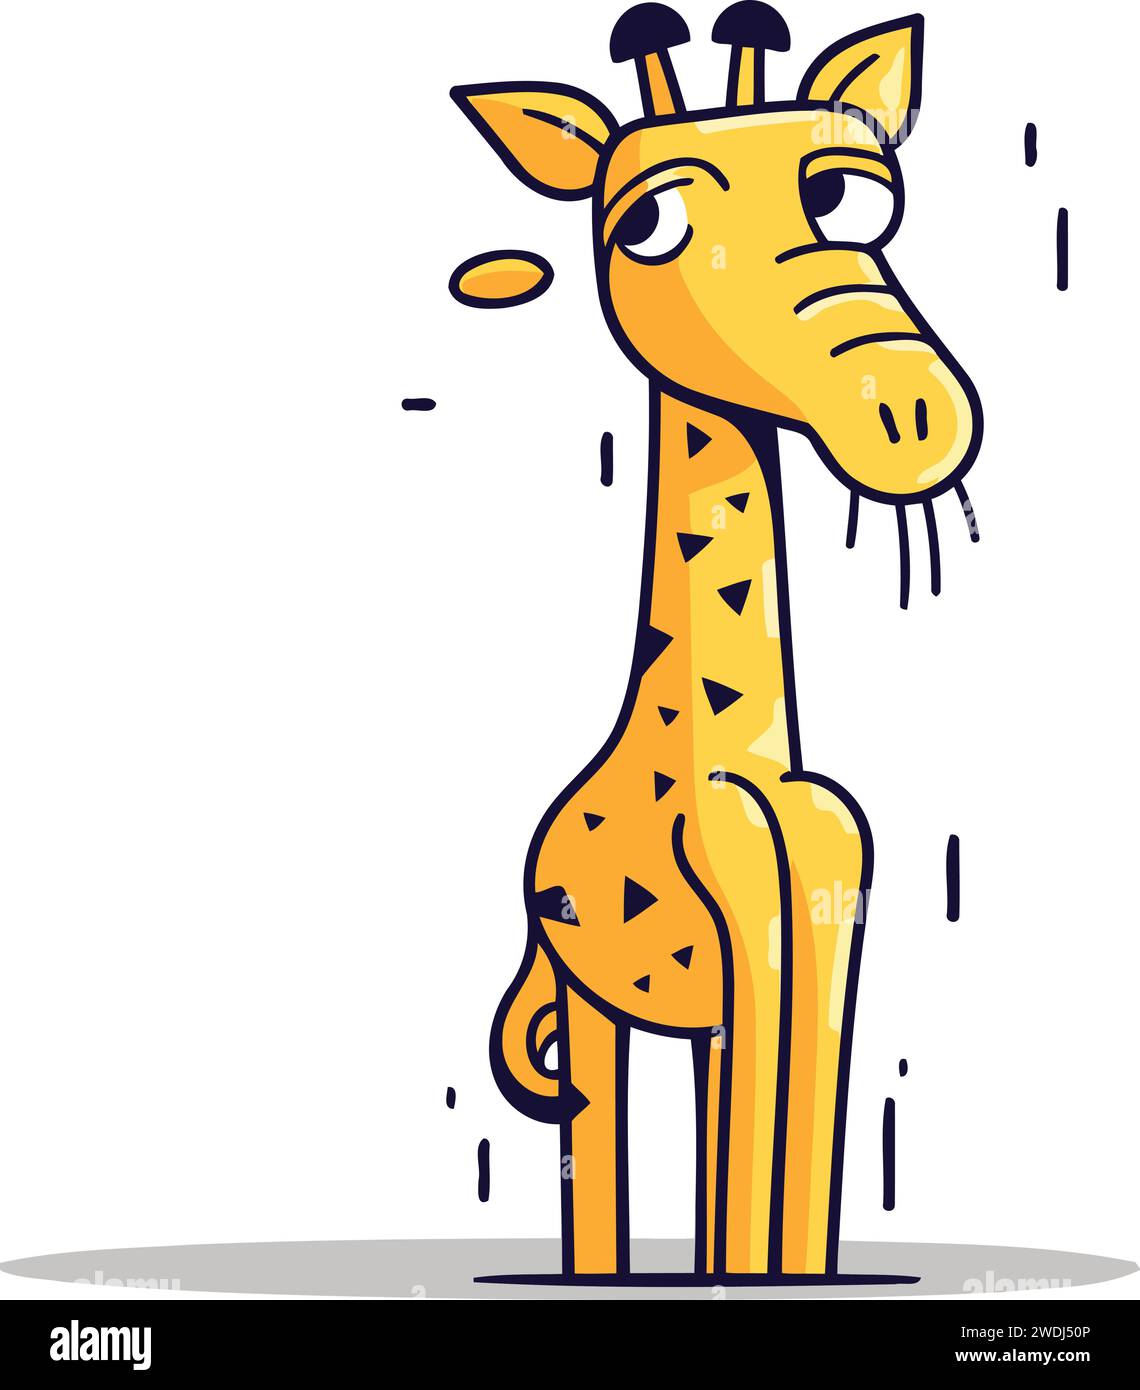 Cartoon giraffe with rain drops. Vector illustration in flat style Stock Vector